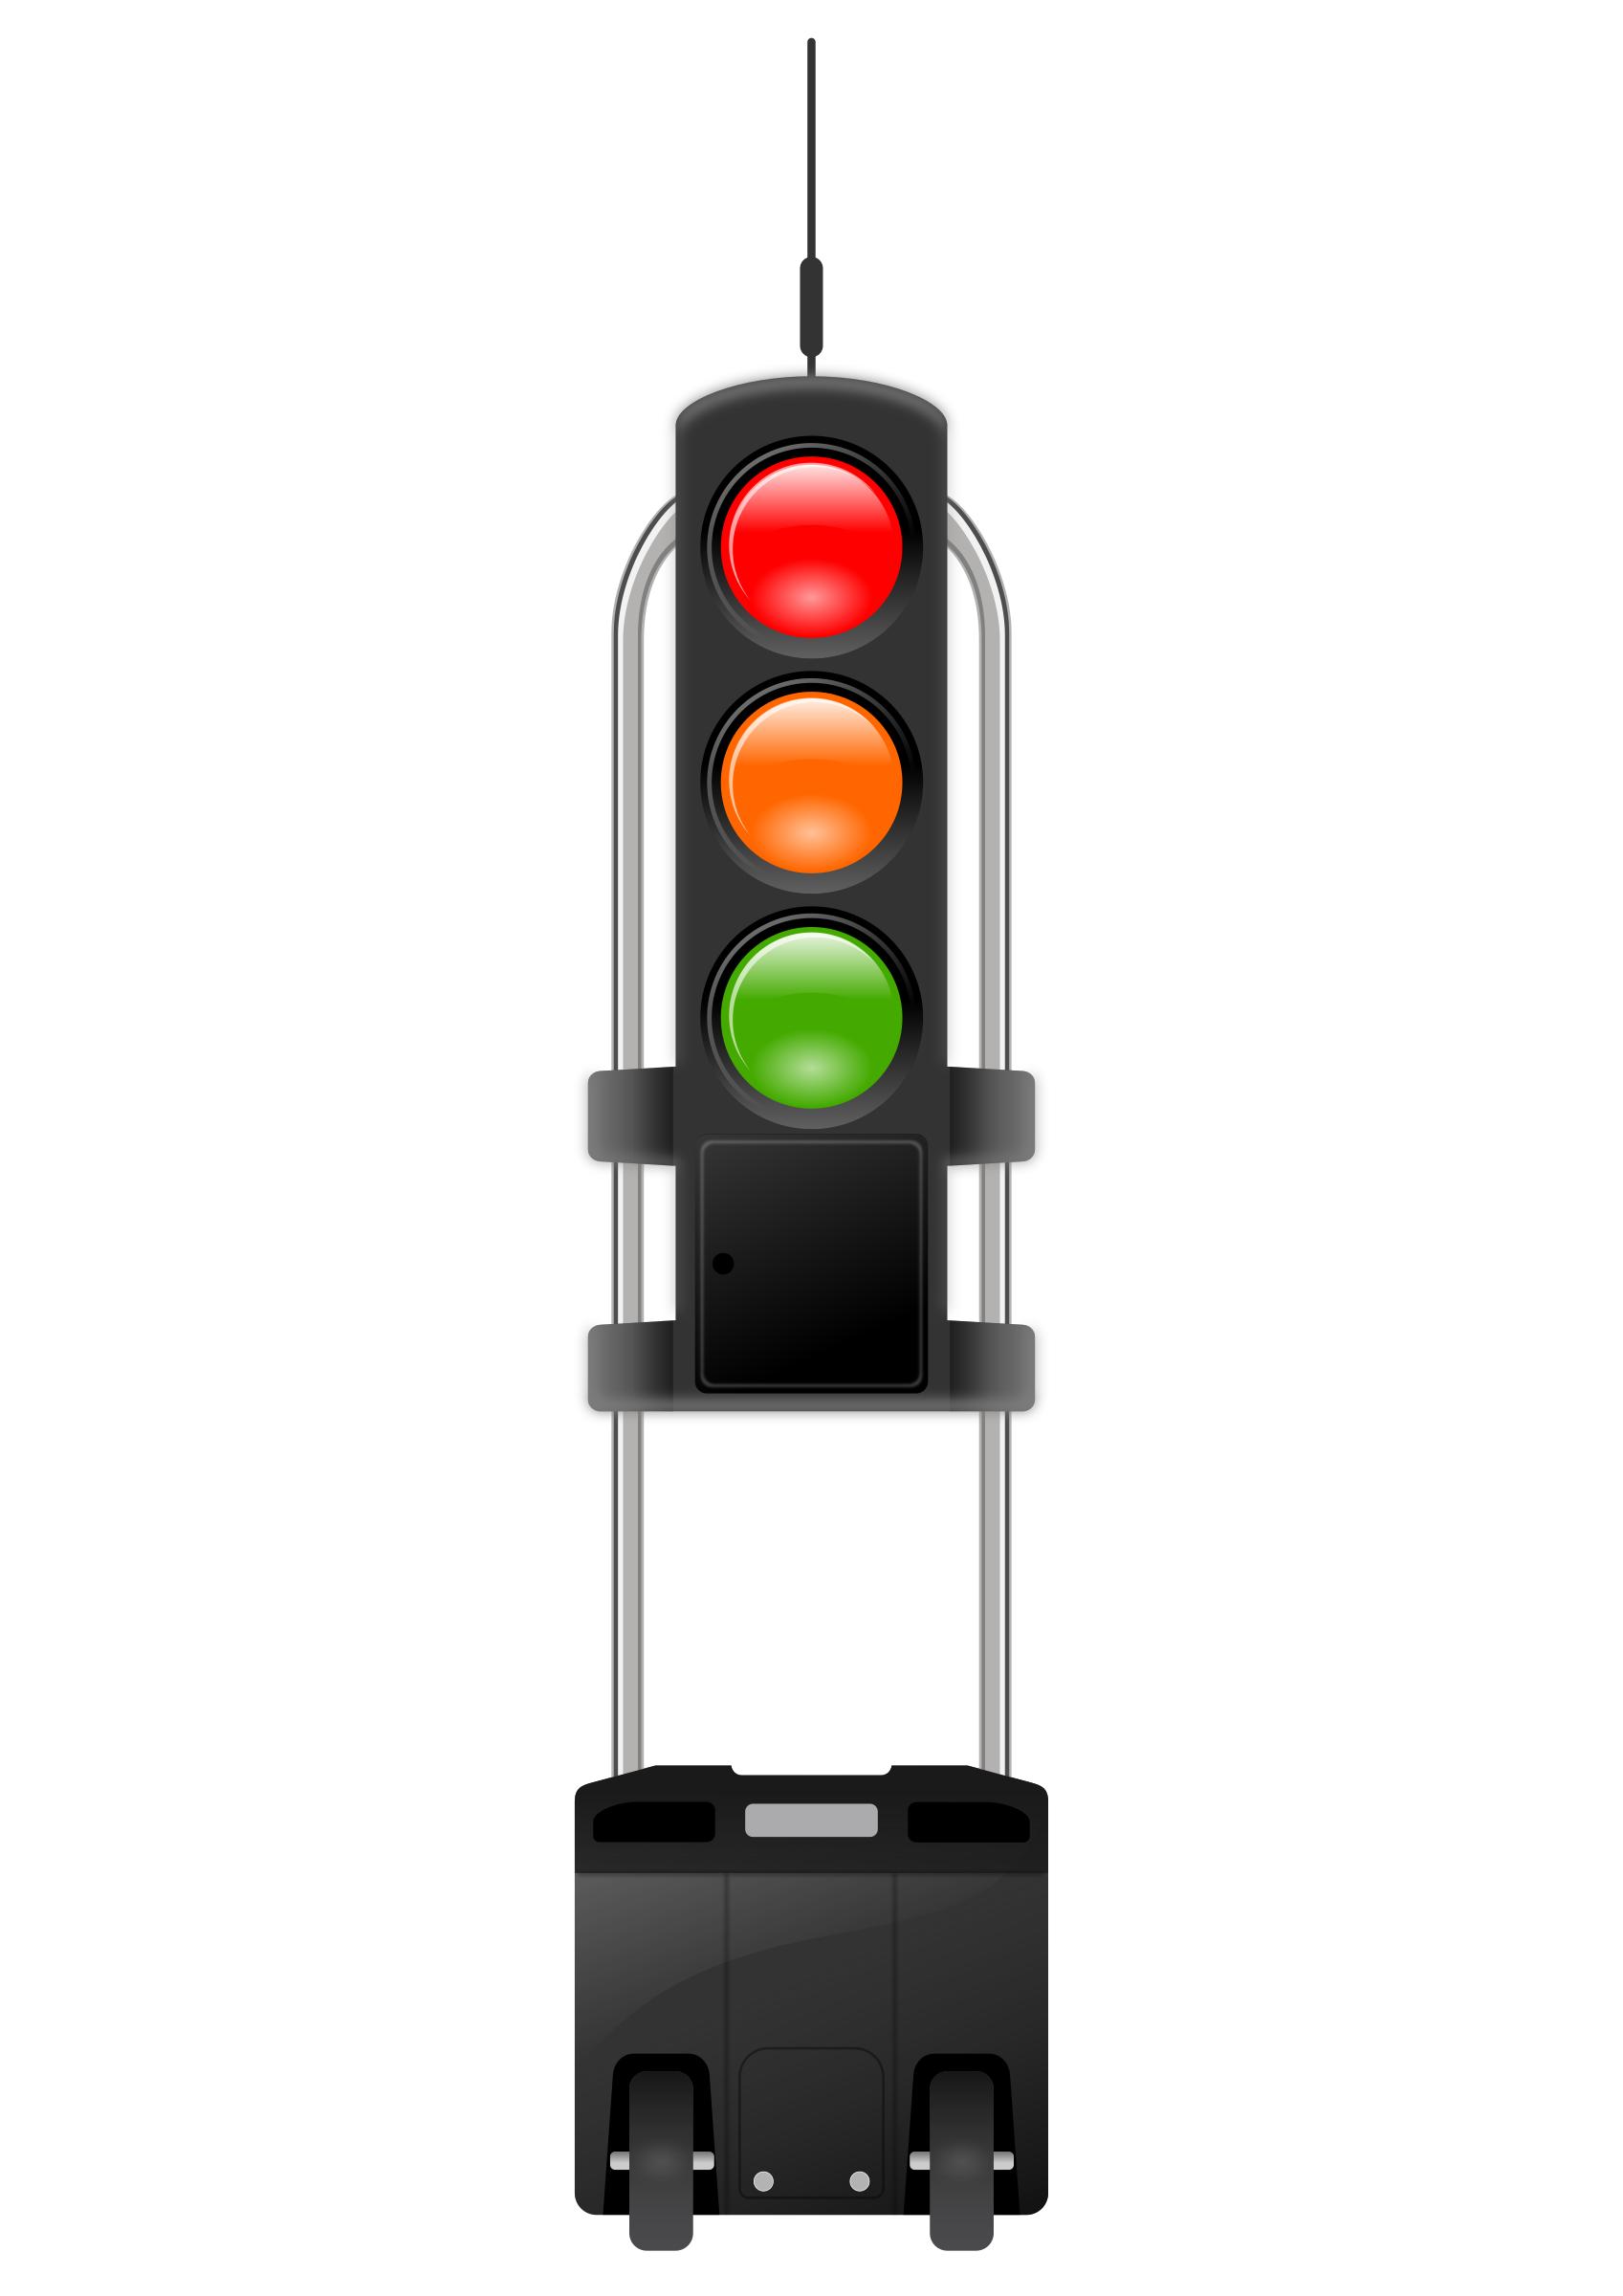 mobile roadwork traffic-light icons